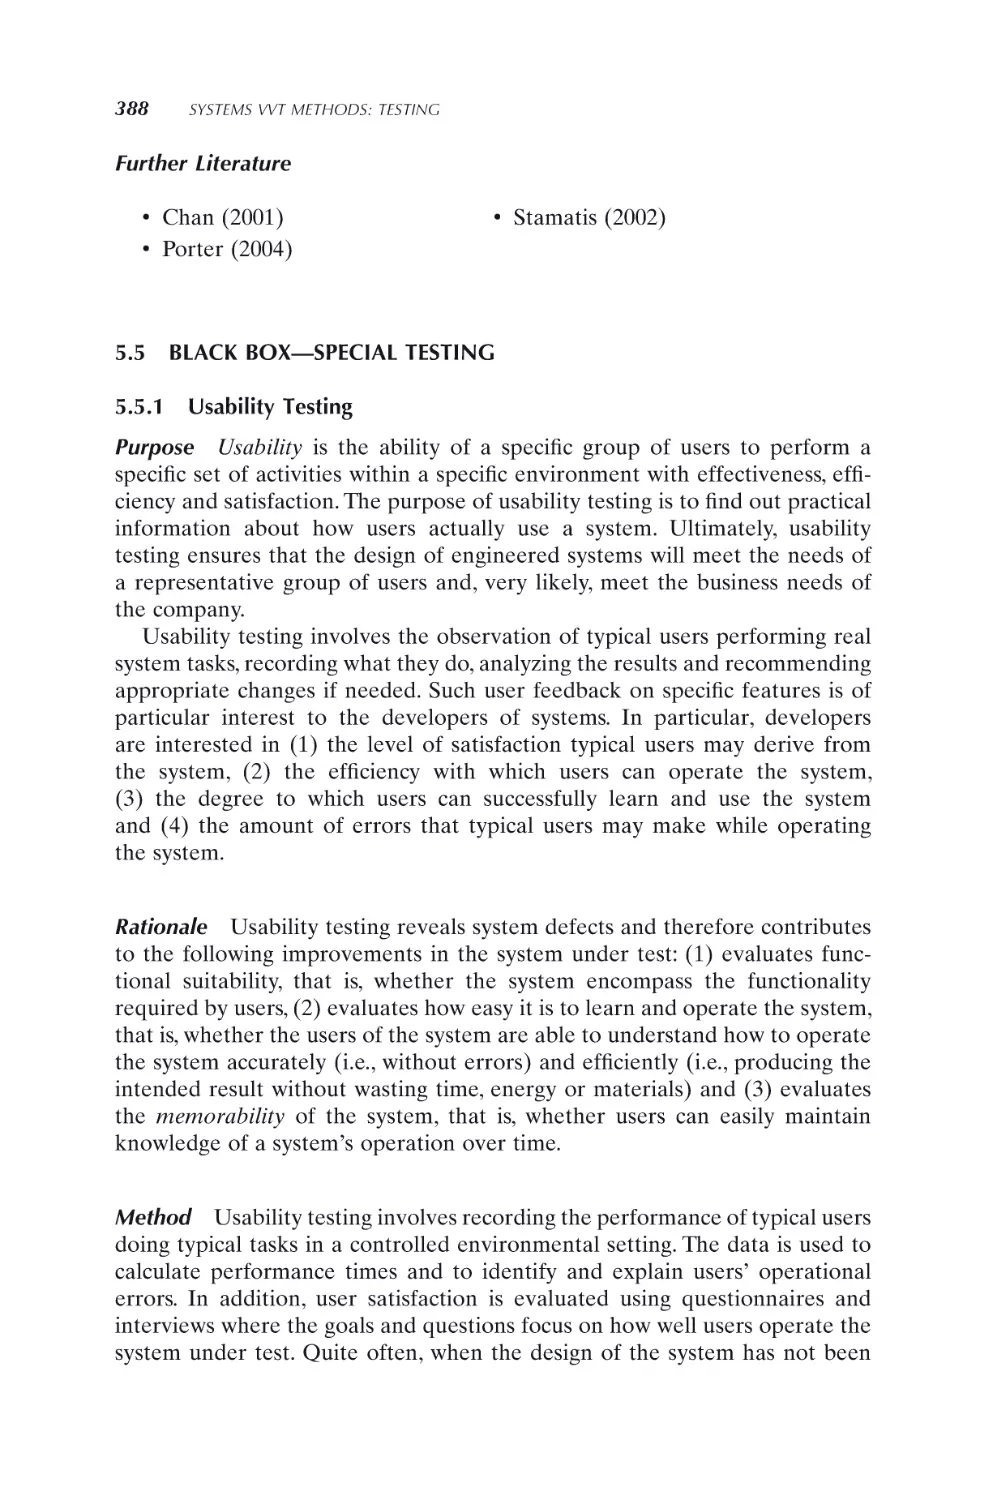 5.5 BLACK BOX—SPECIAL TESTING
5.5.1 Usability Testing